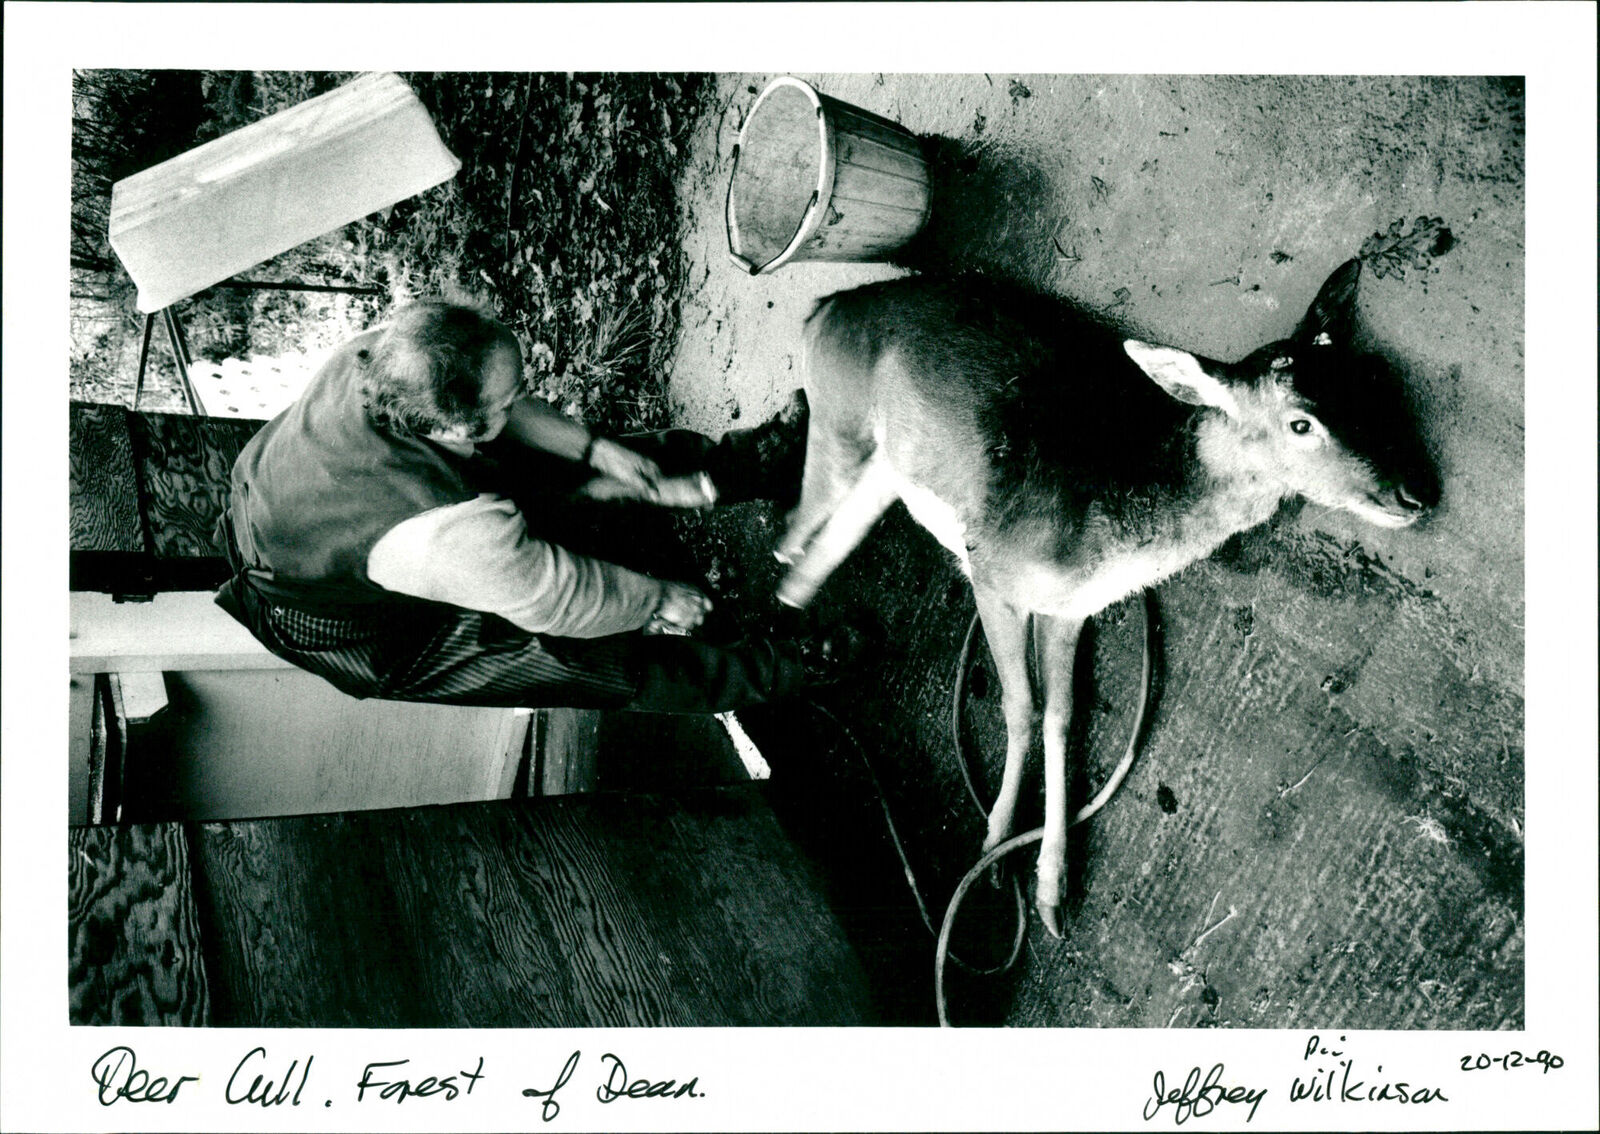 Deer Cull - Vintage Photograph 2745990